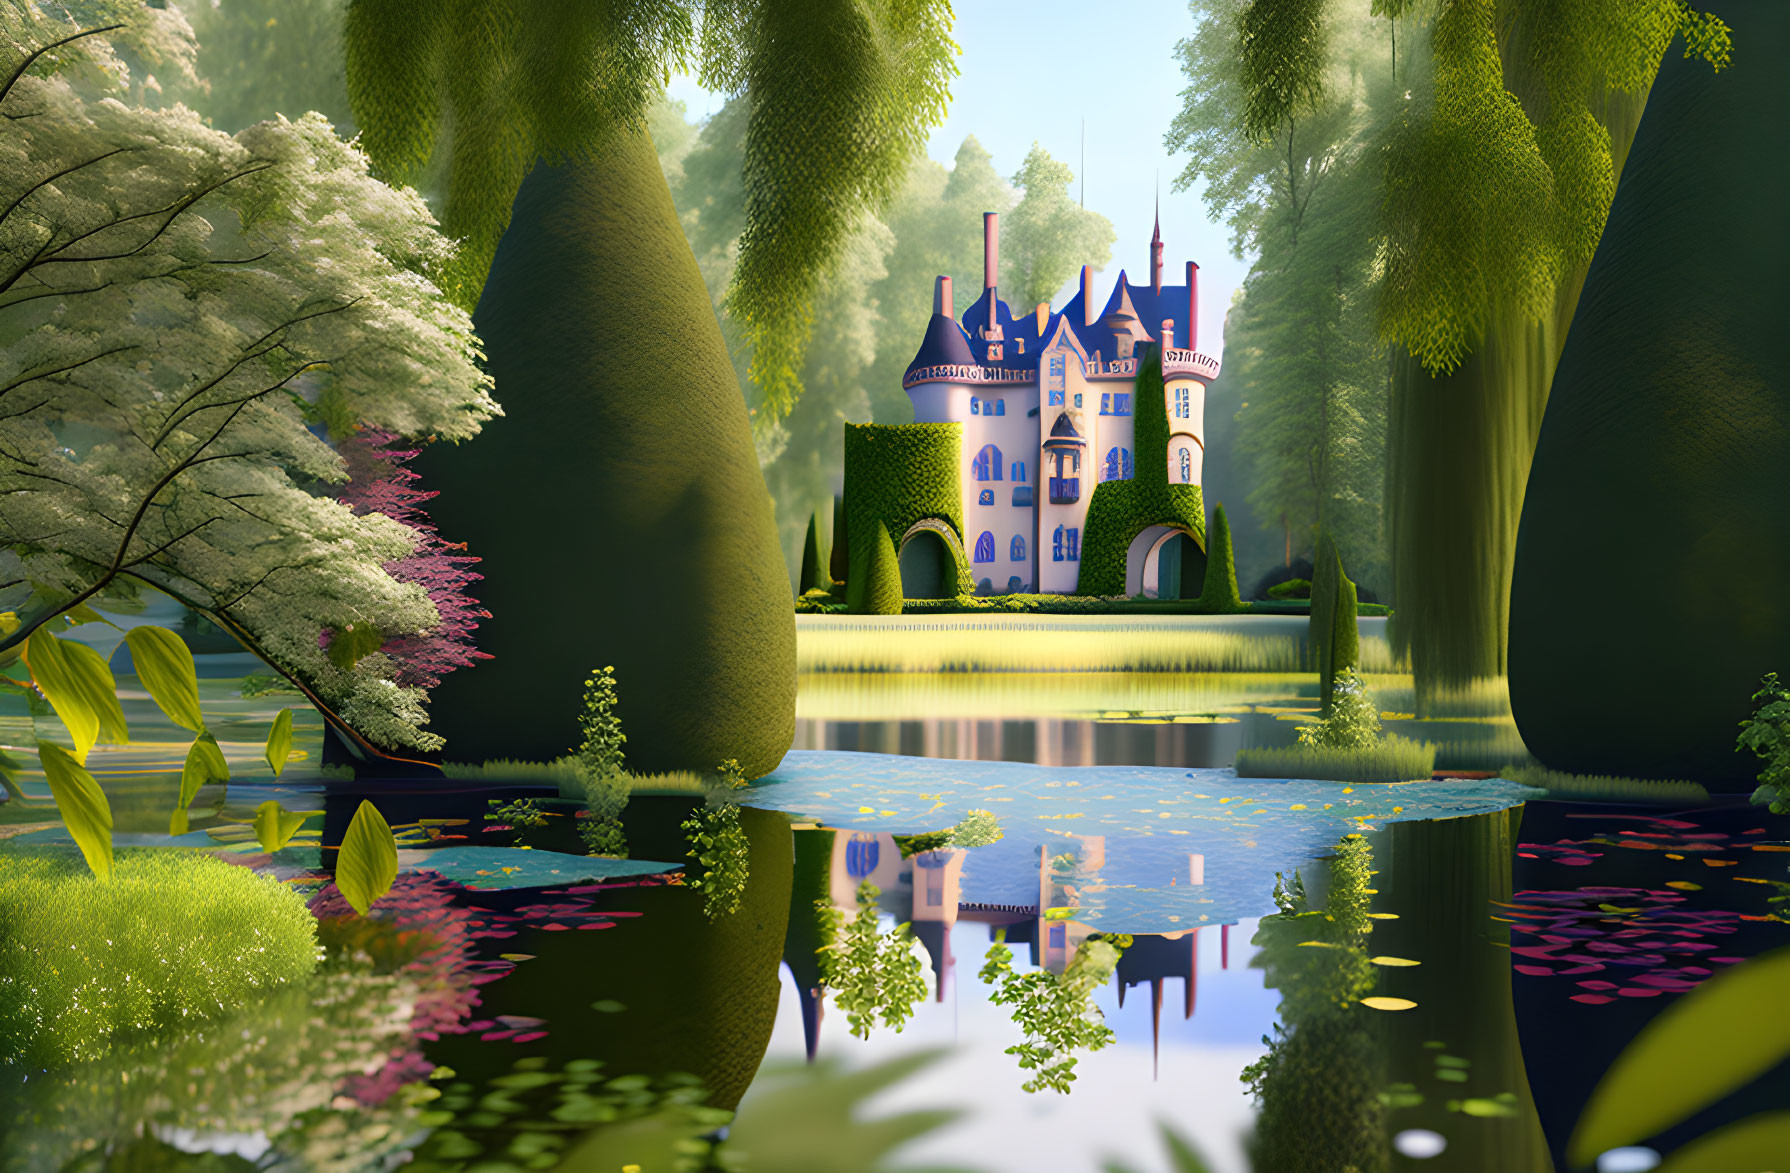 Majestic fairy-tale castle in serene forest setting